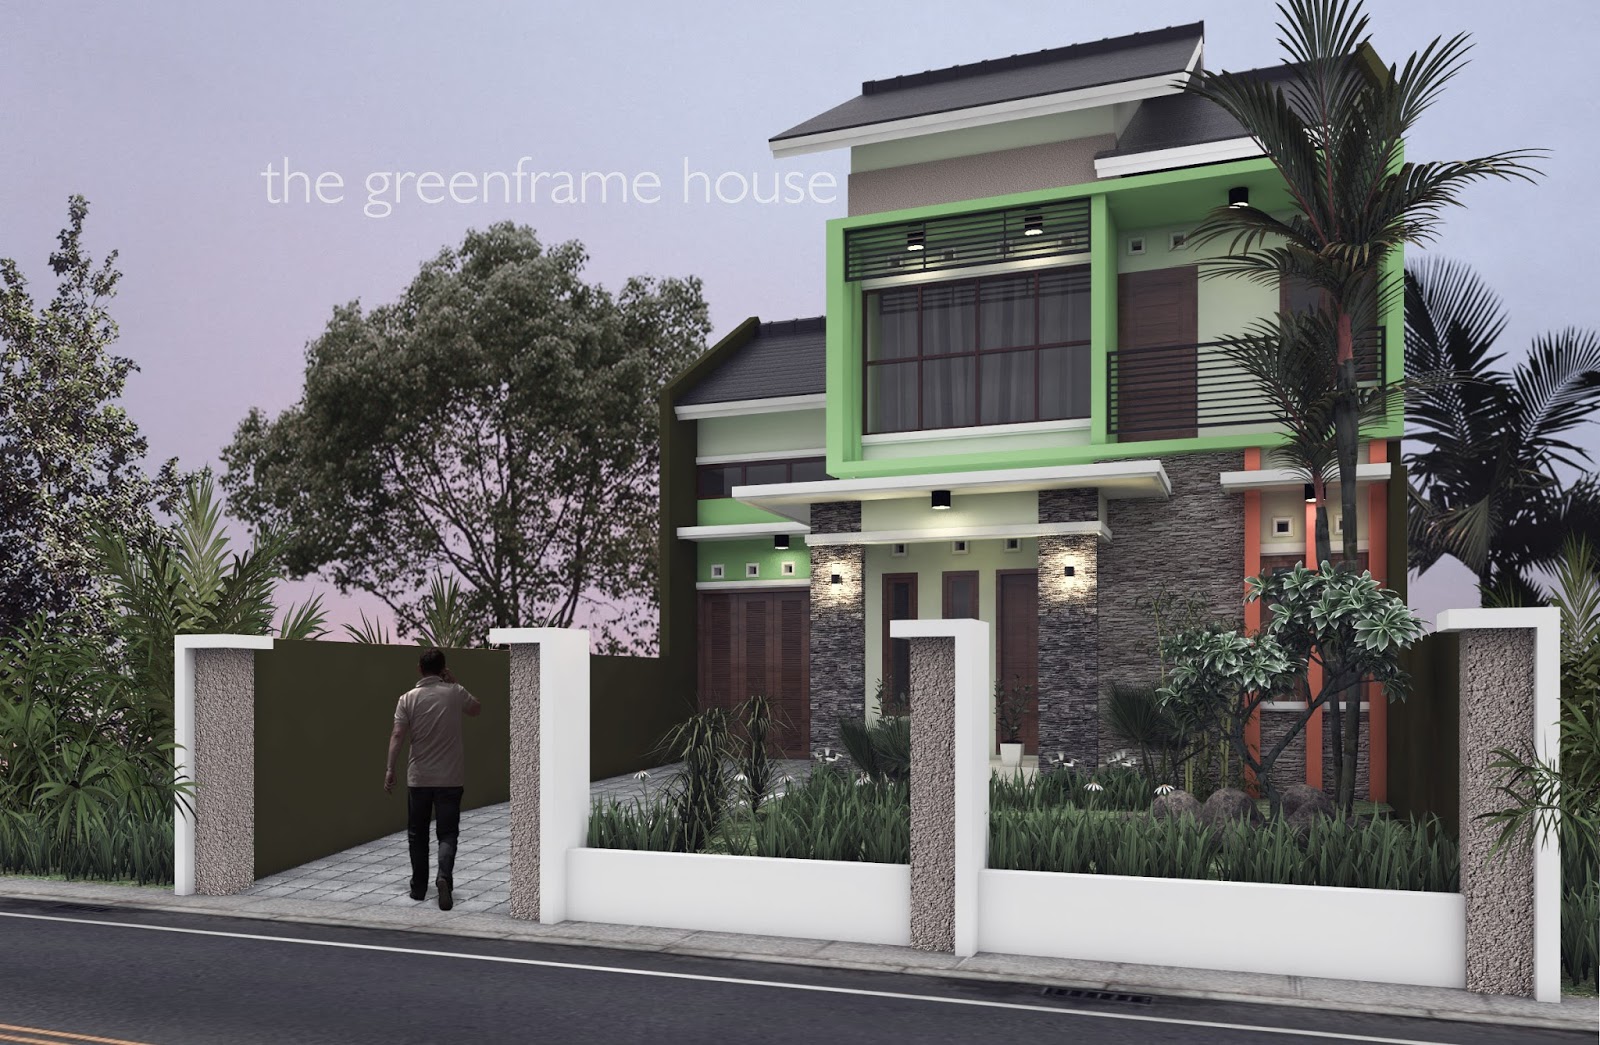 The Greenframe House